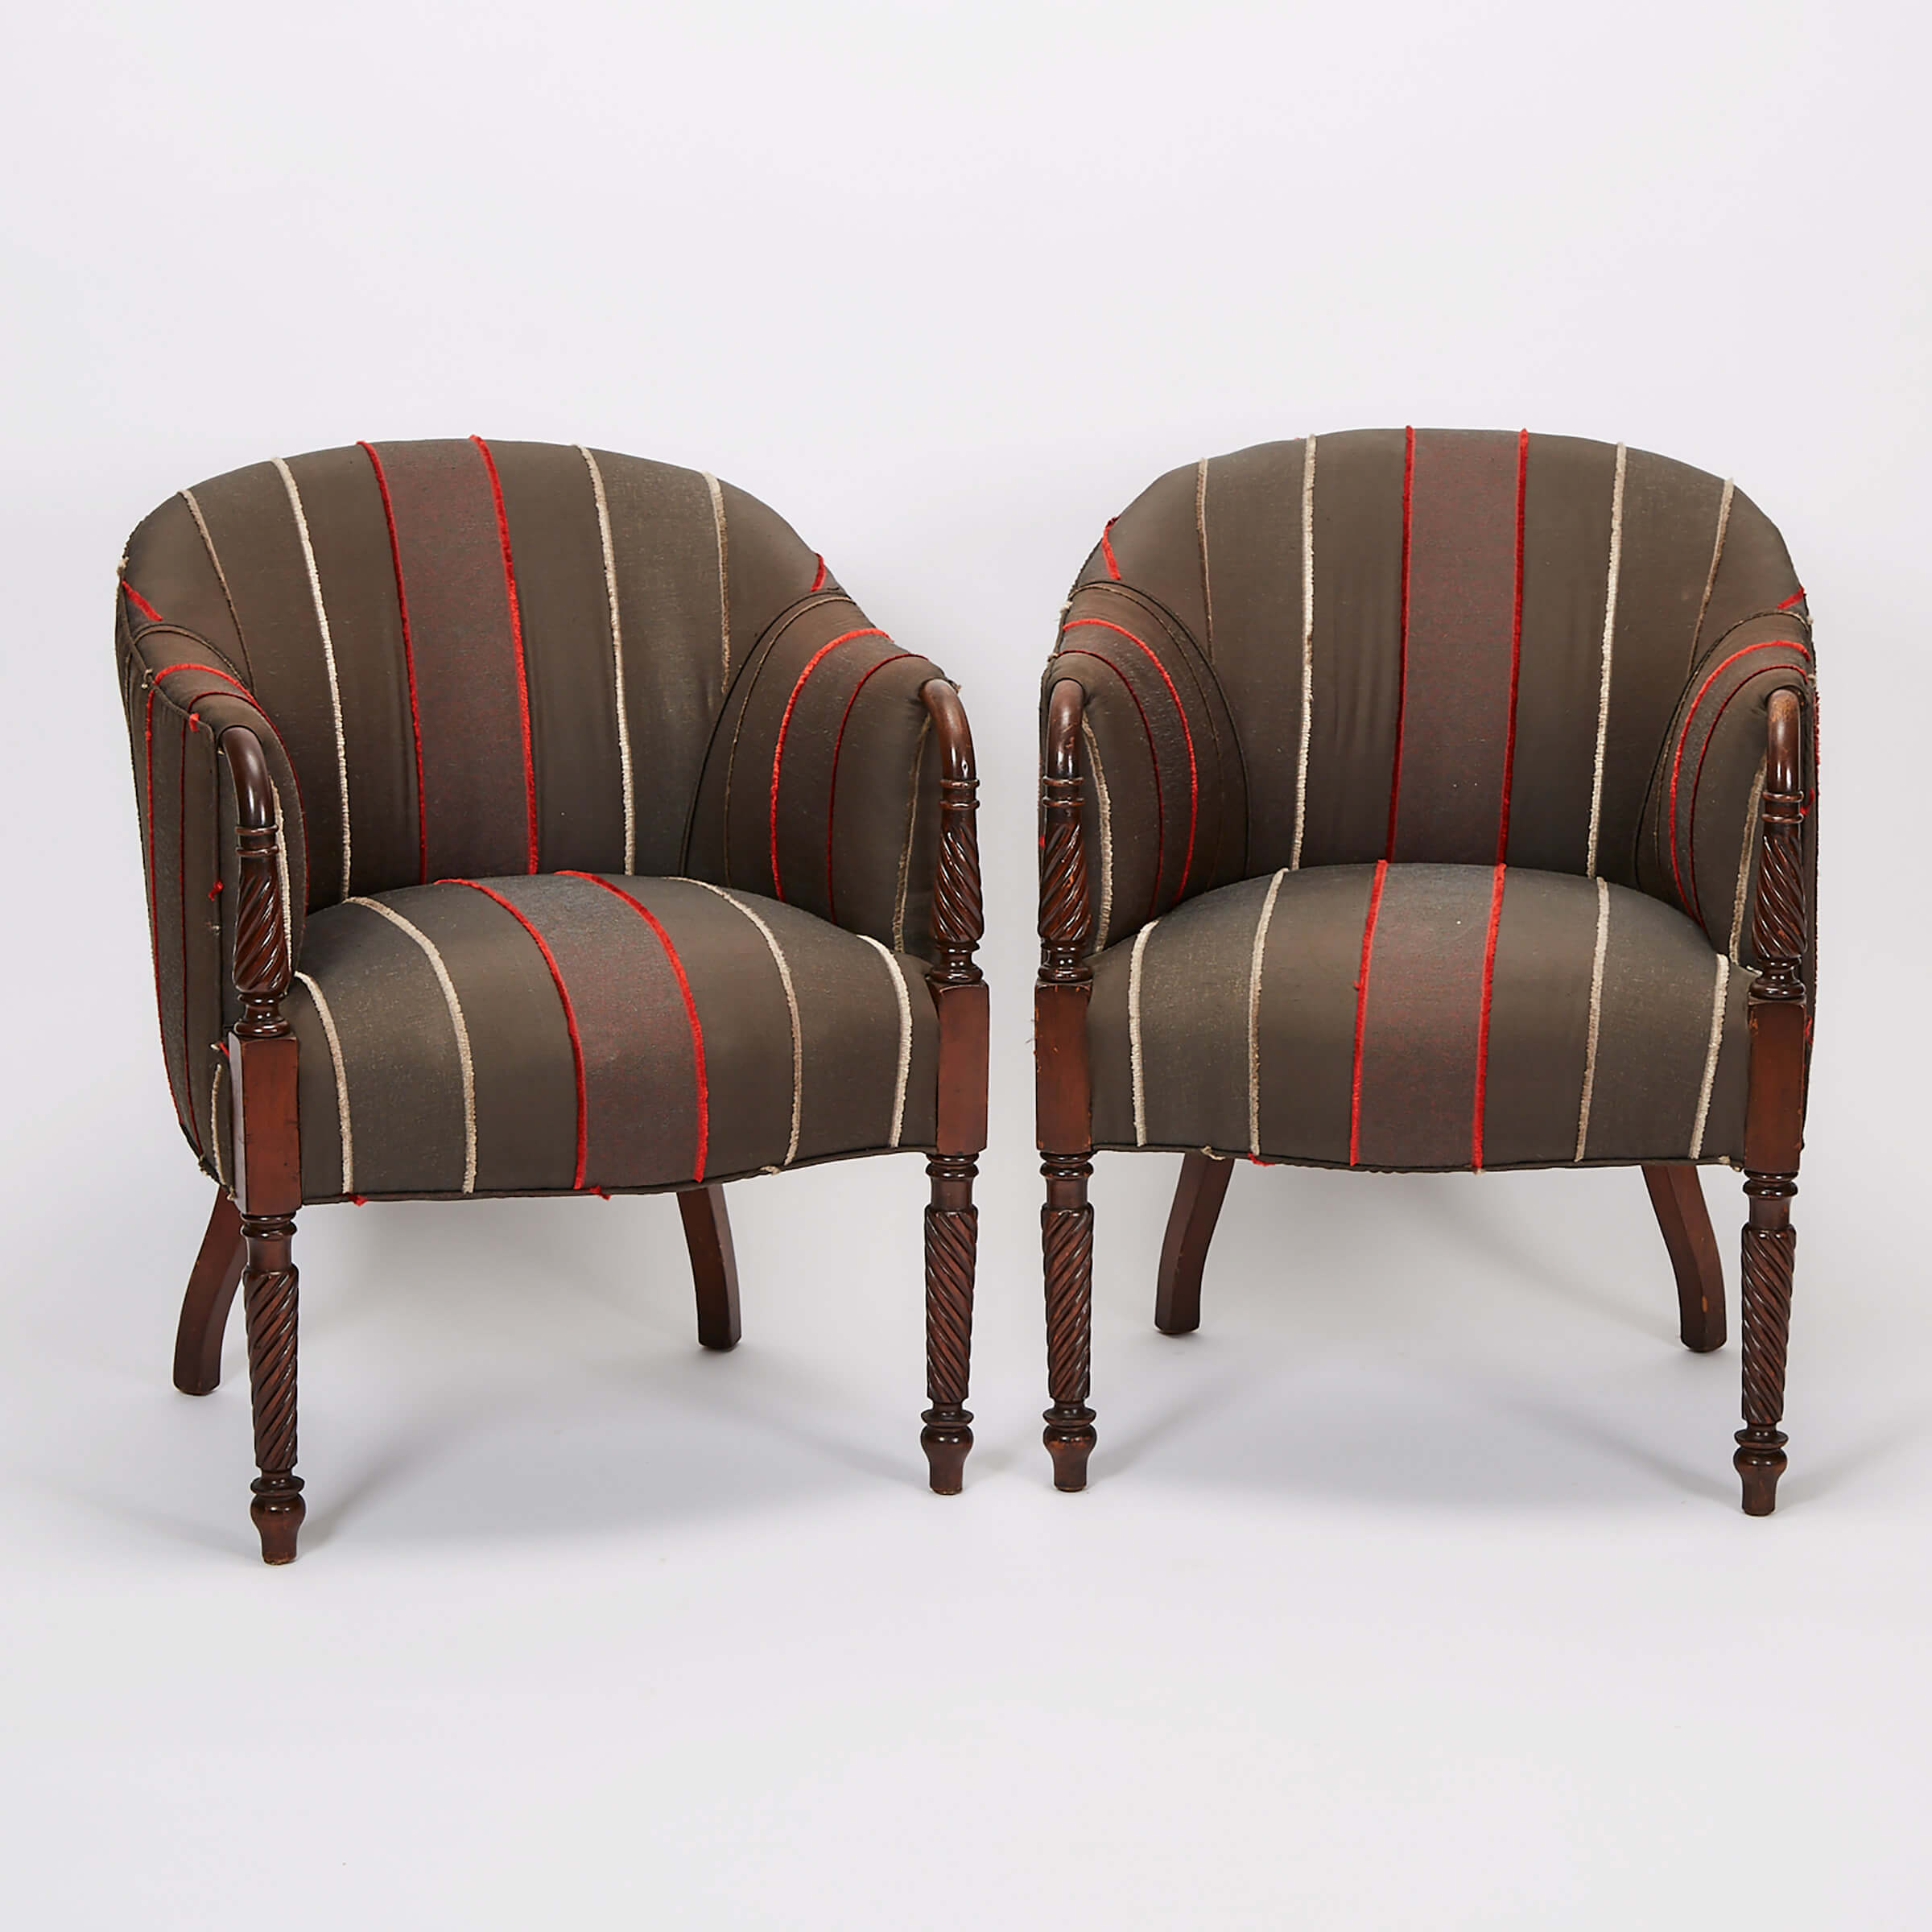 Pair of Regency Style Mahogany Tub Chairs, c.1900